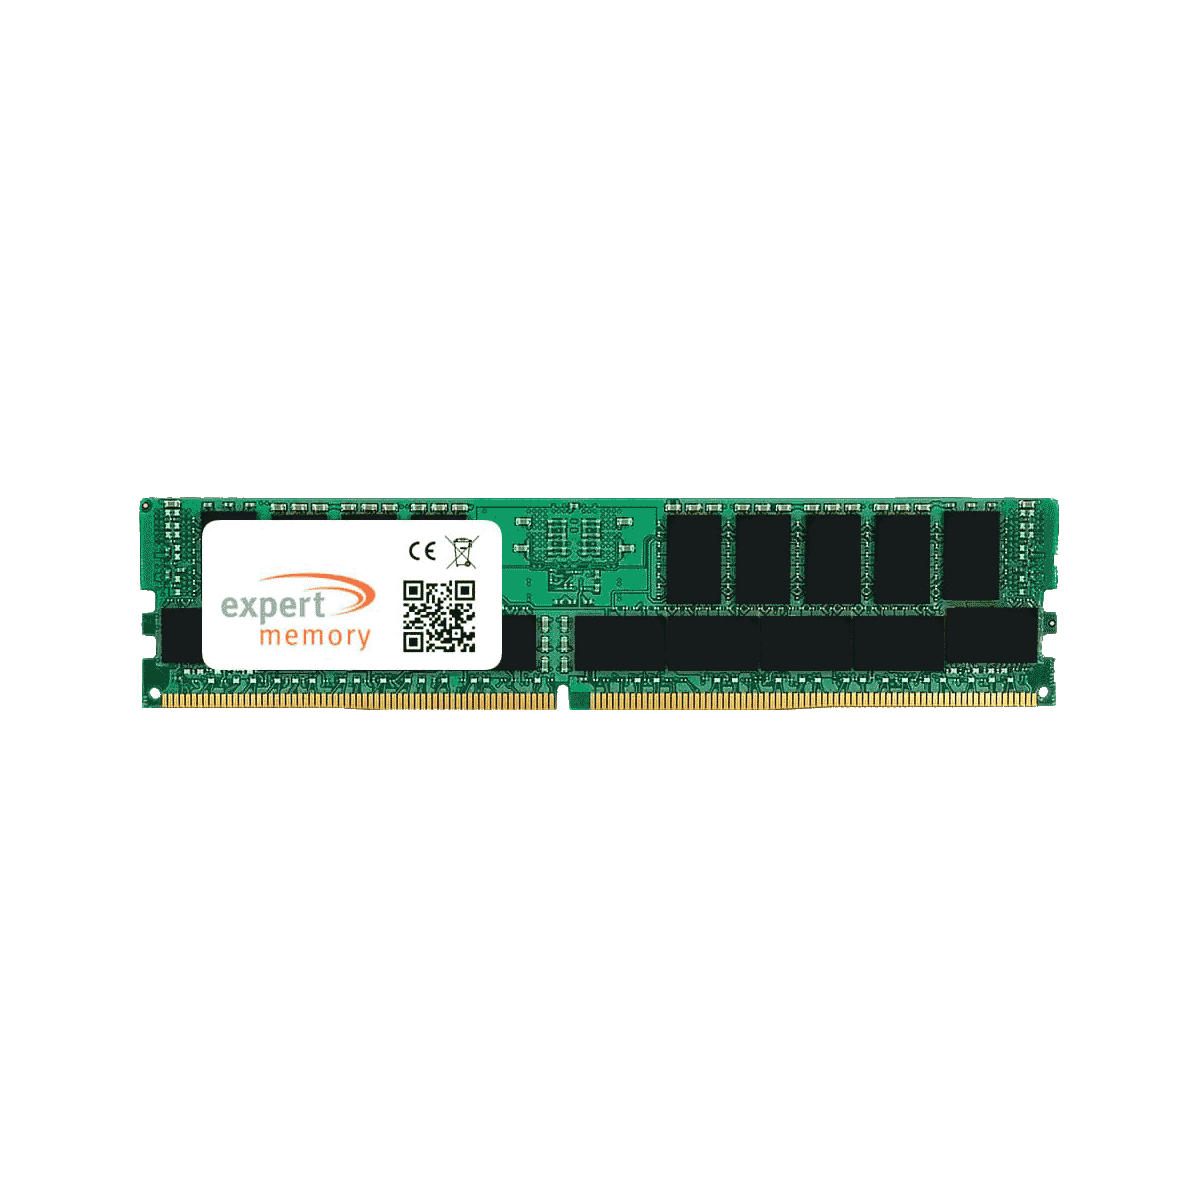 EXPERT MEMORY 8GB RDIMM 2133 2Rx4 Server Dell Memory R730xd PowerEdge 8 GB RAM Upgrade DDR4